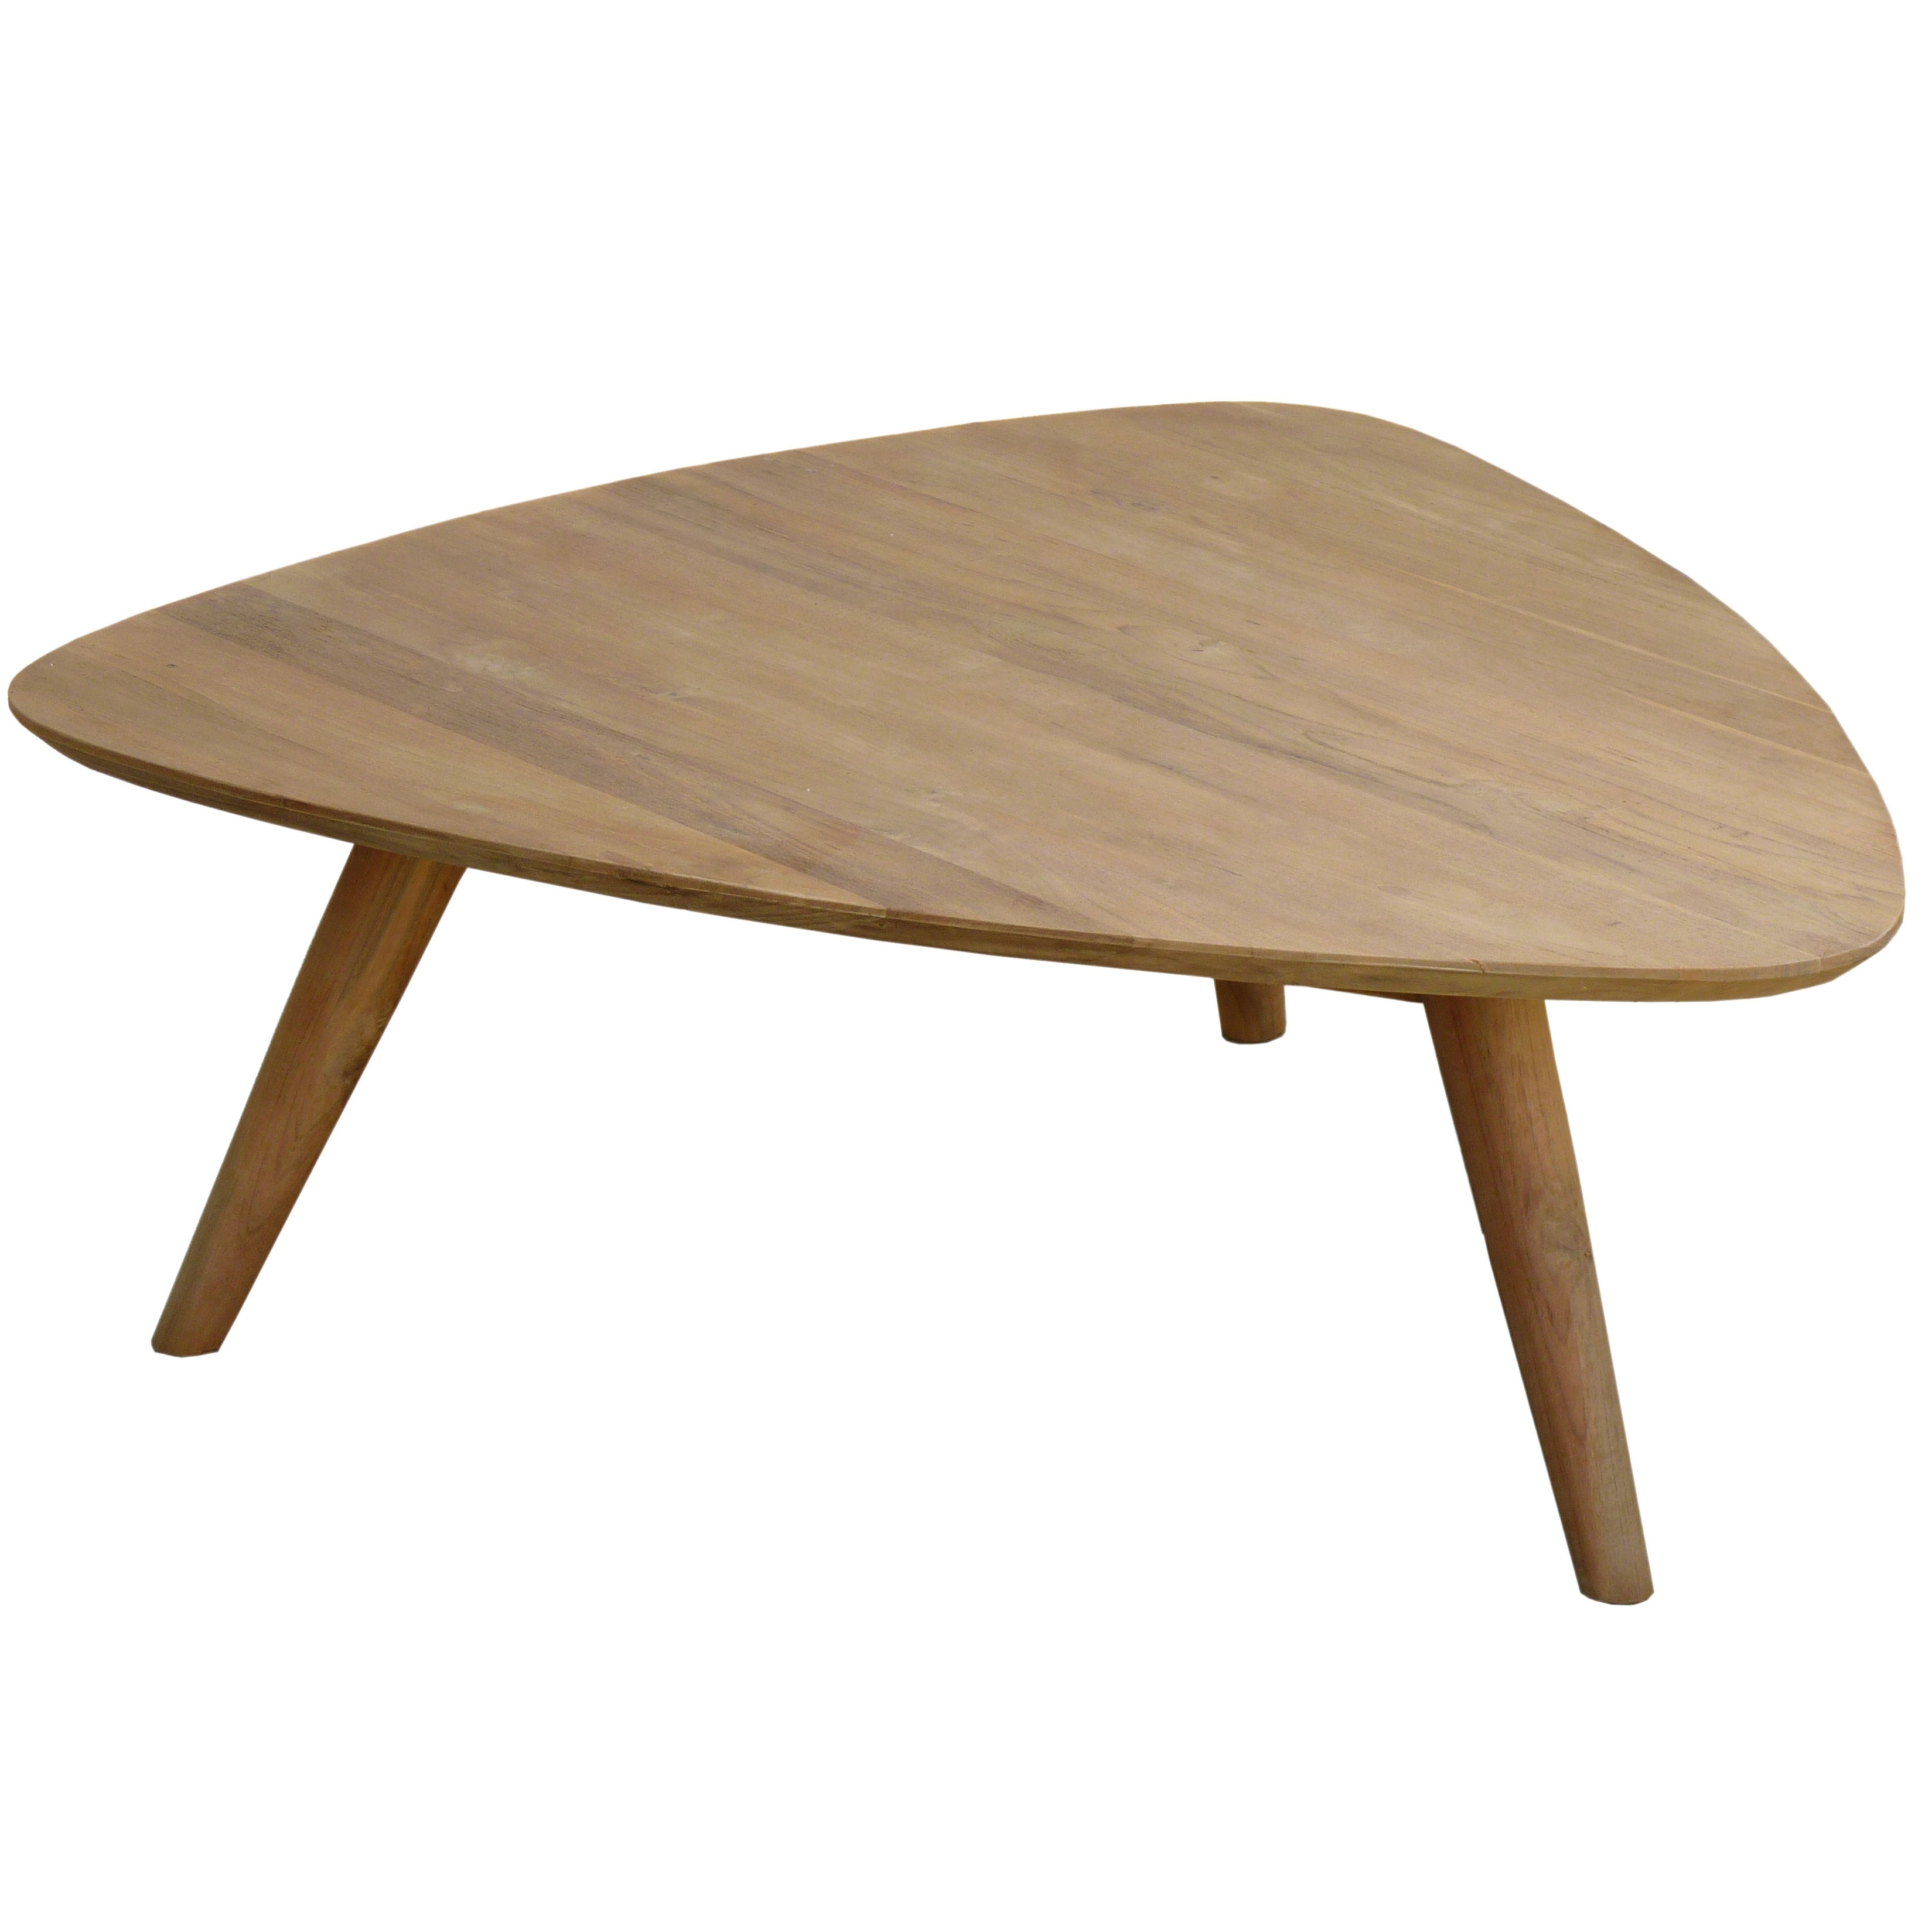 Chic Teak Recycled Teak Wood Retro Coffee Table Overstock 31918222